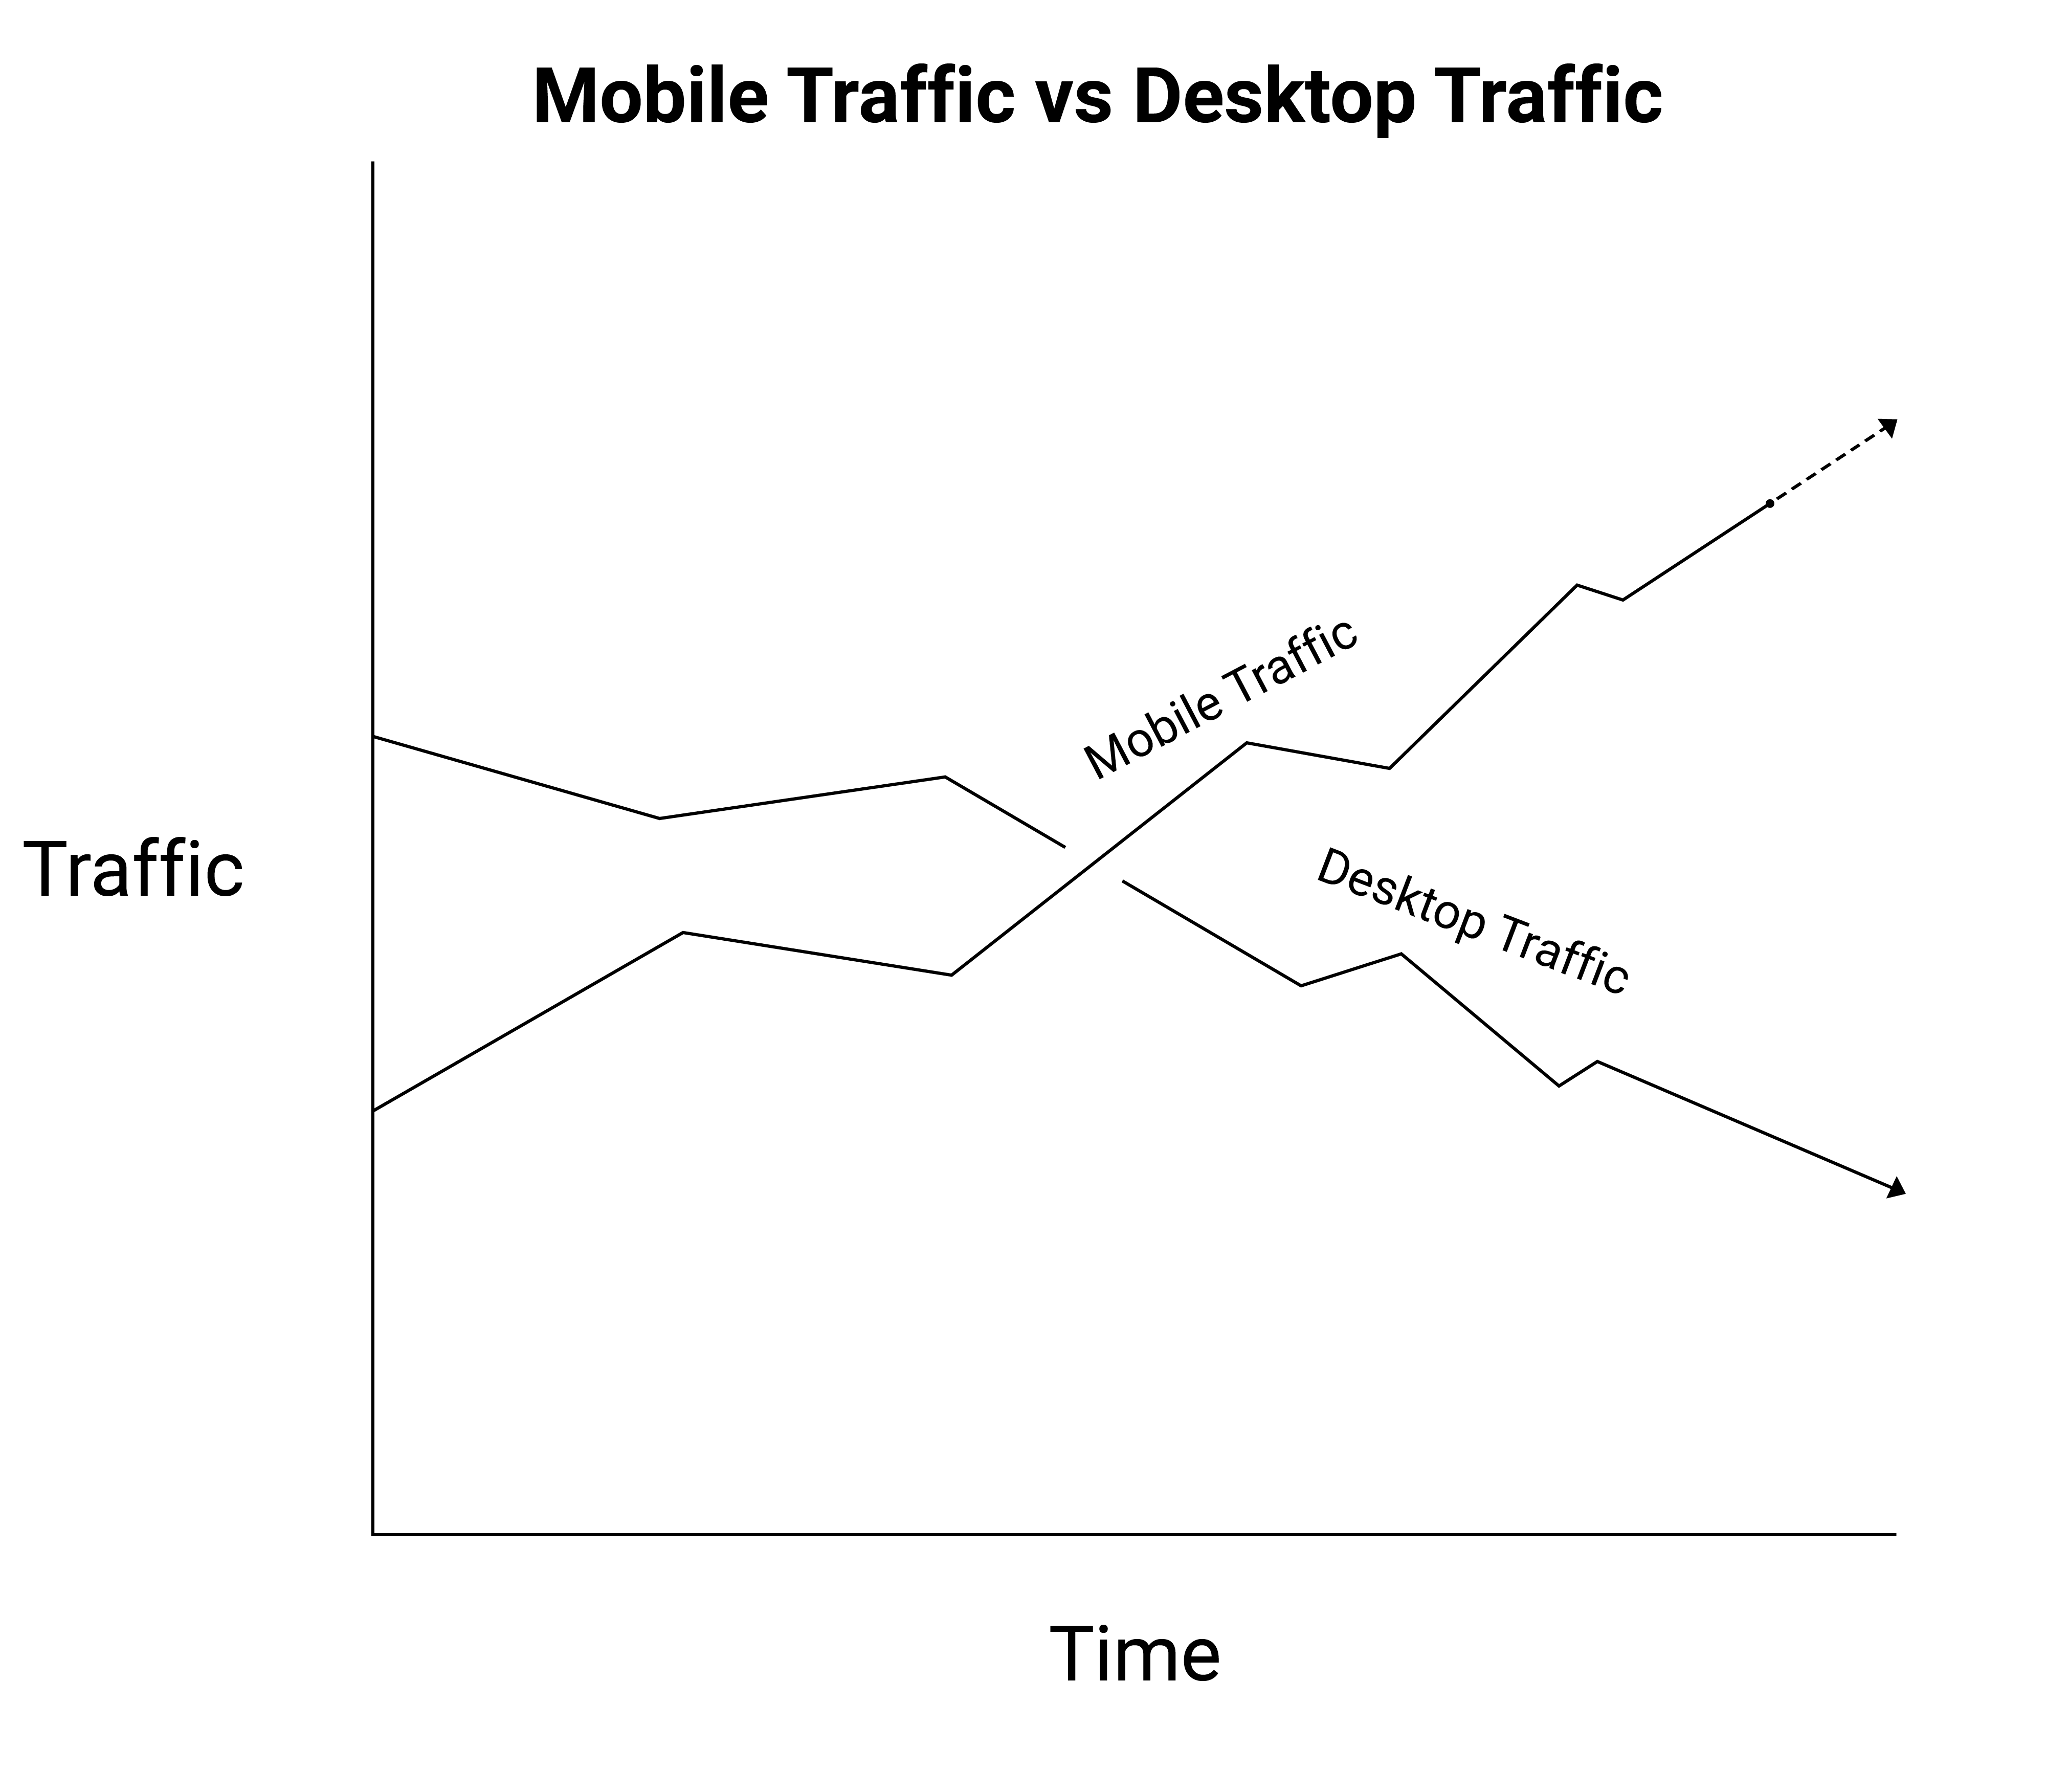 Graph showing mobile traffic vs desktop traffic